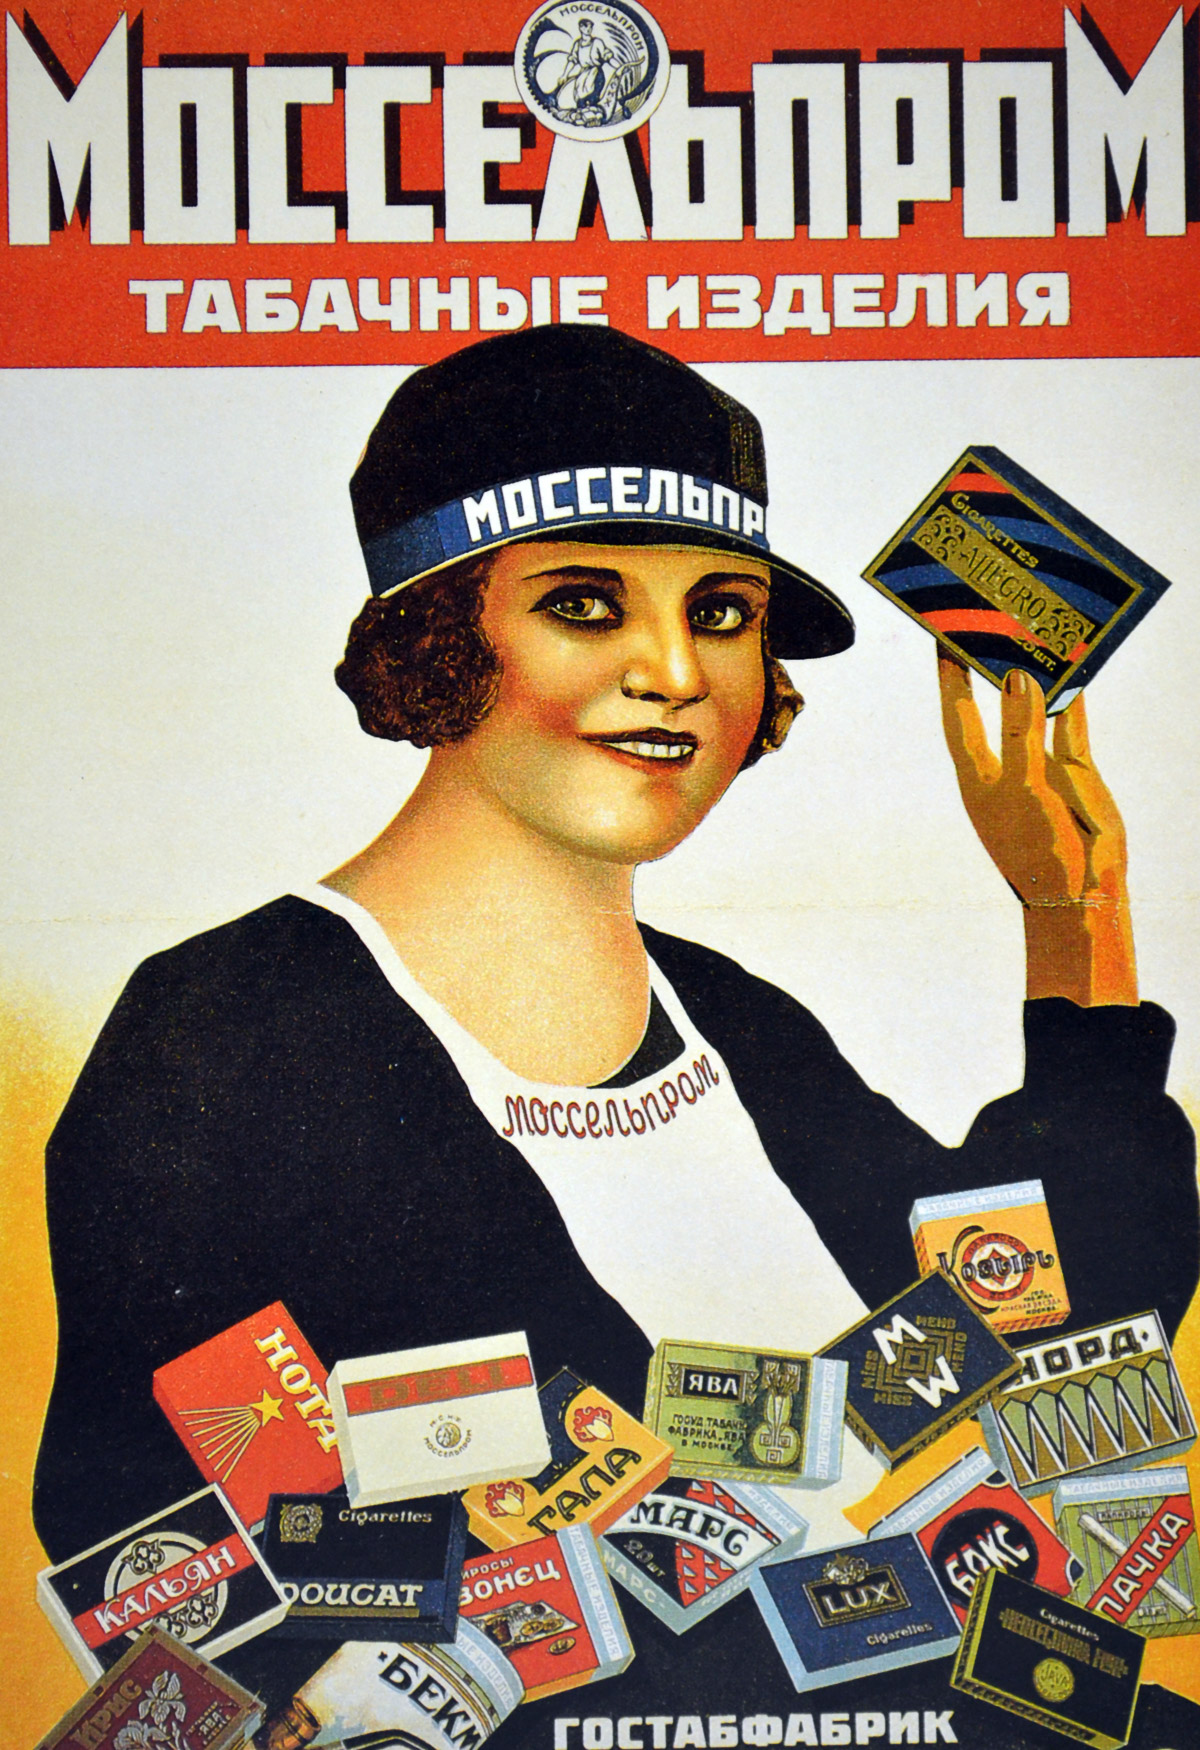 Sovetskaya reklama sigaret 14